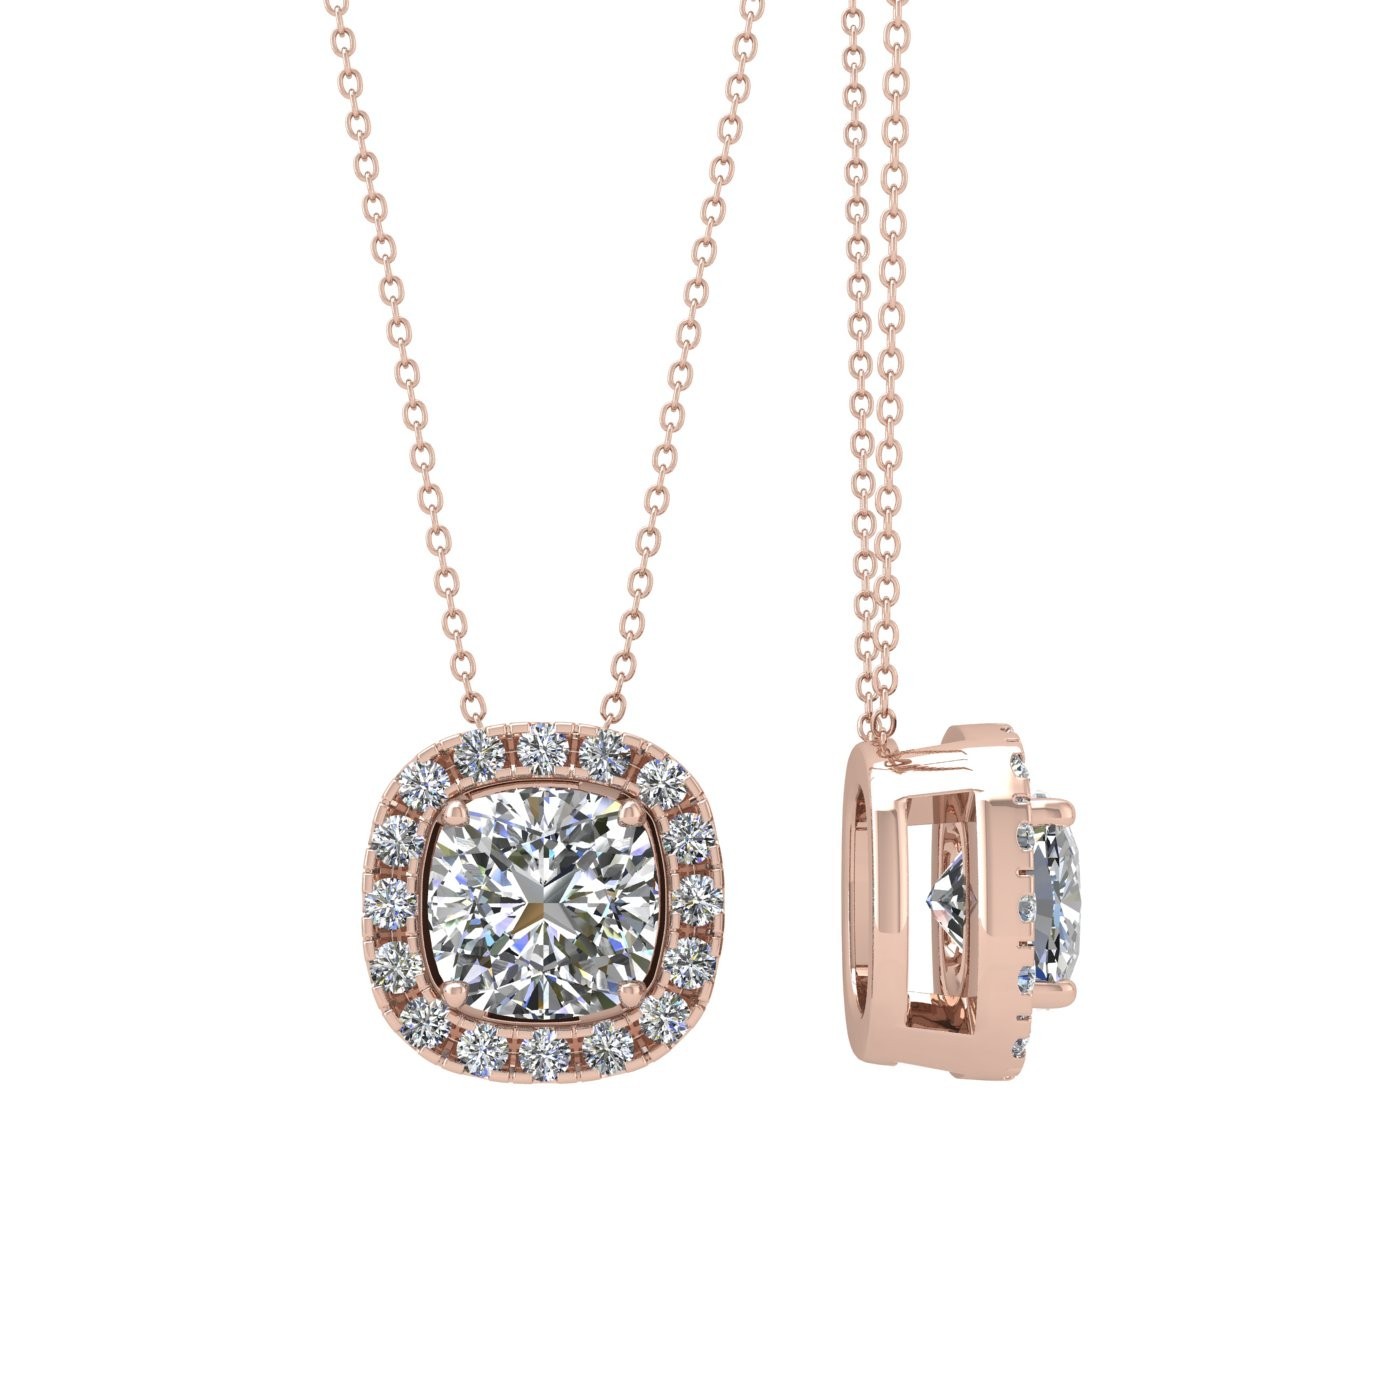 18k rose gold  1 ct 4 prongs cushion shape diamond pendant with diamond pavÉ set halo